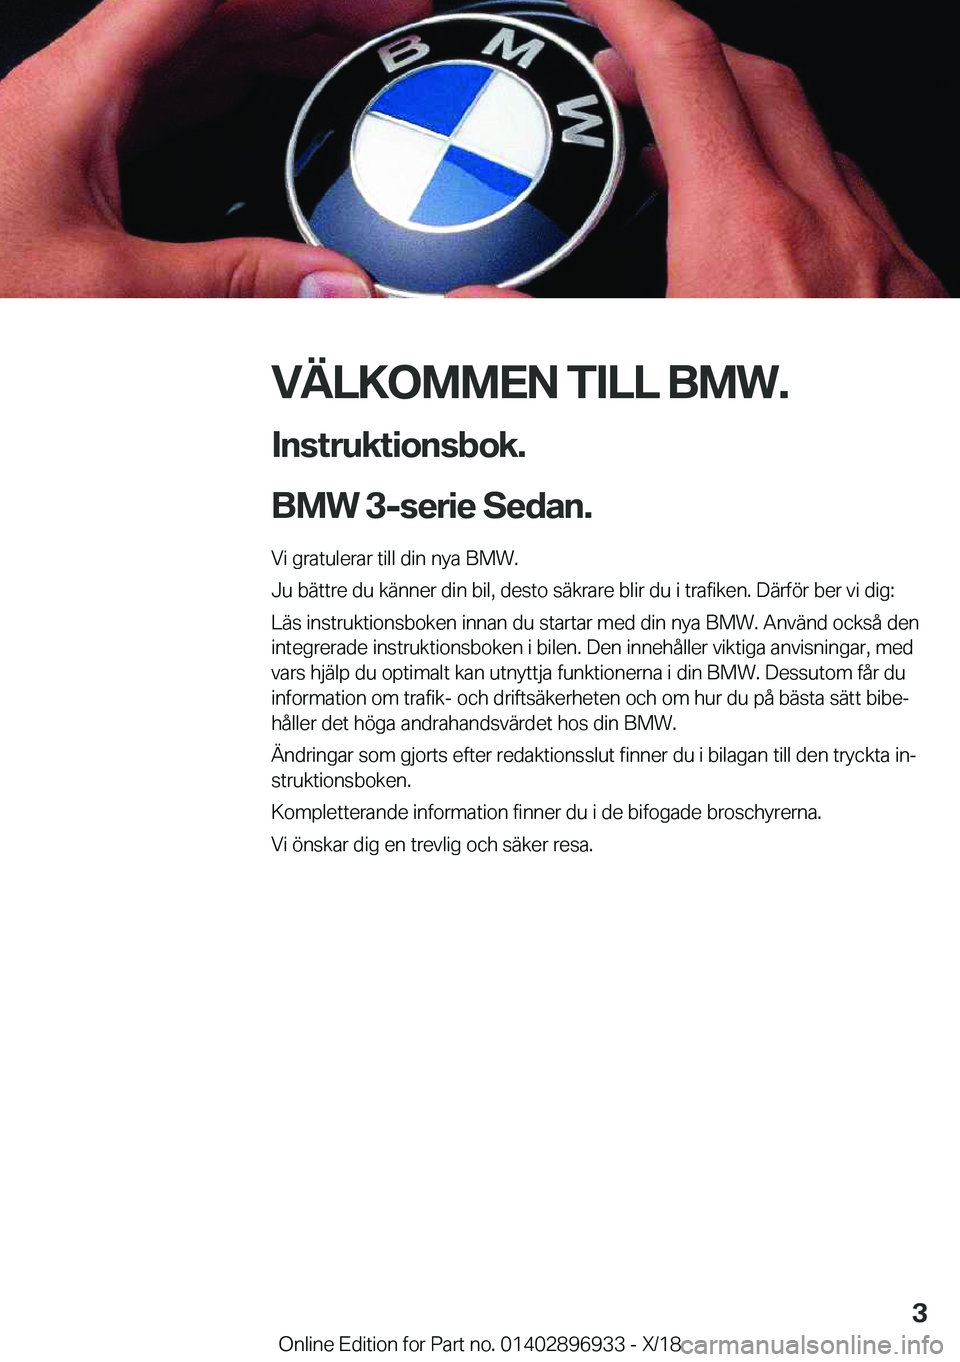 BMW 3 SERIES 2019  InstruktionsbÖcker (in Swedish) �V�Ä�L�K�O�M�M�E�N��T�I�L�L��B�M�W�.�I�n�s�t�r�u�k�t�i�o�n�s�b�o�k�.
�B�M�W��3�-�s�e�r�i�e��S�e�d�a�n�.
�V�i��g�r�a�t�u�l�e�r�a�r��t�i�l�l��d�i�n��n�y�a��B�M�W�.
�J�u��b�ä�t�t�r�e��d�u��